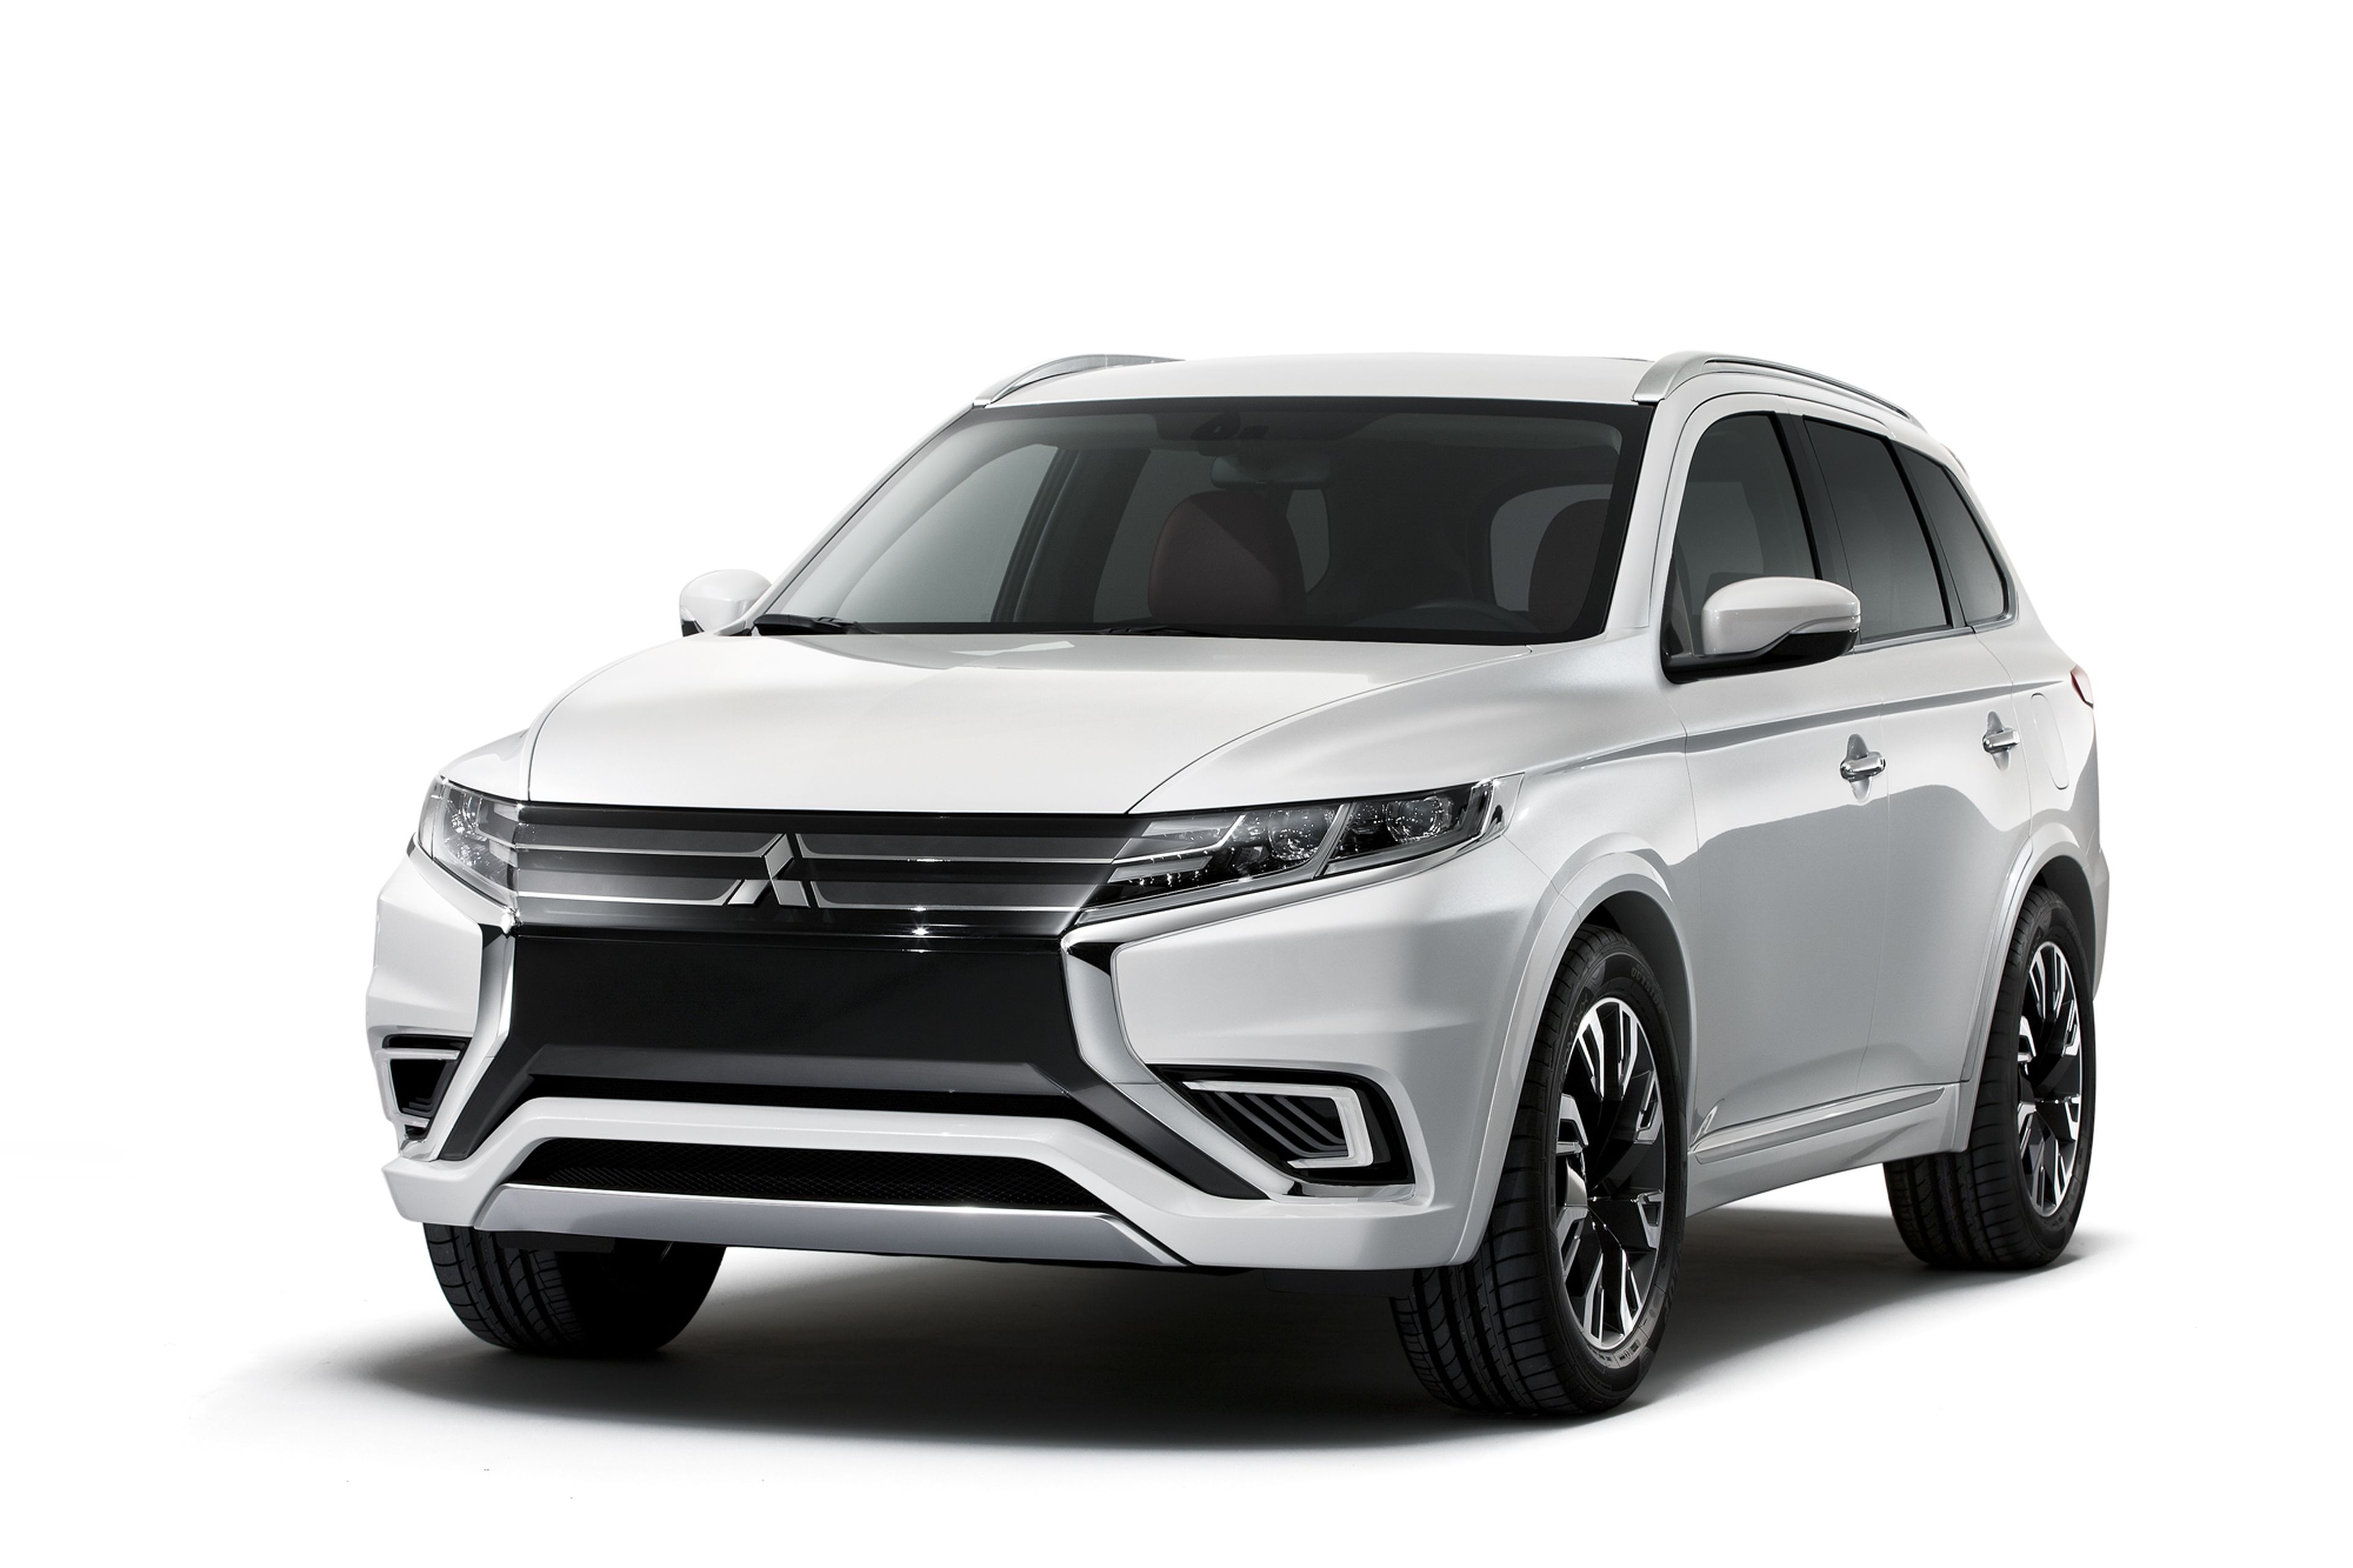 Mitsubishi Outlander Concept S frontal